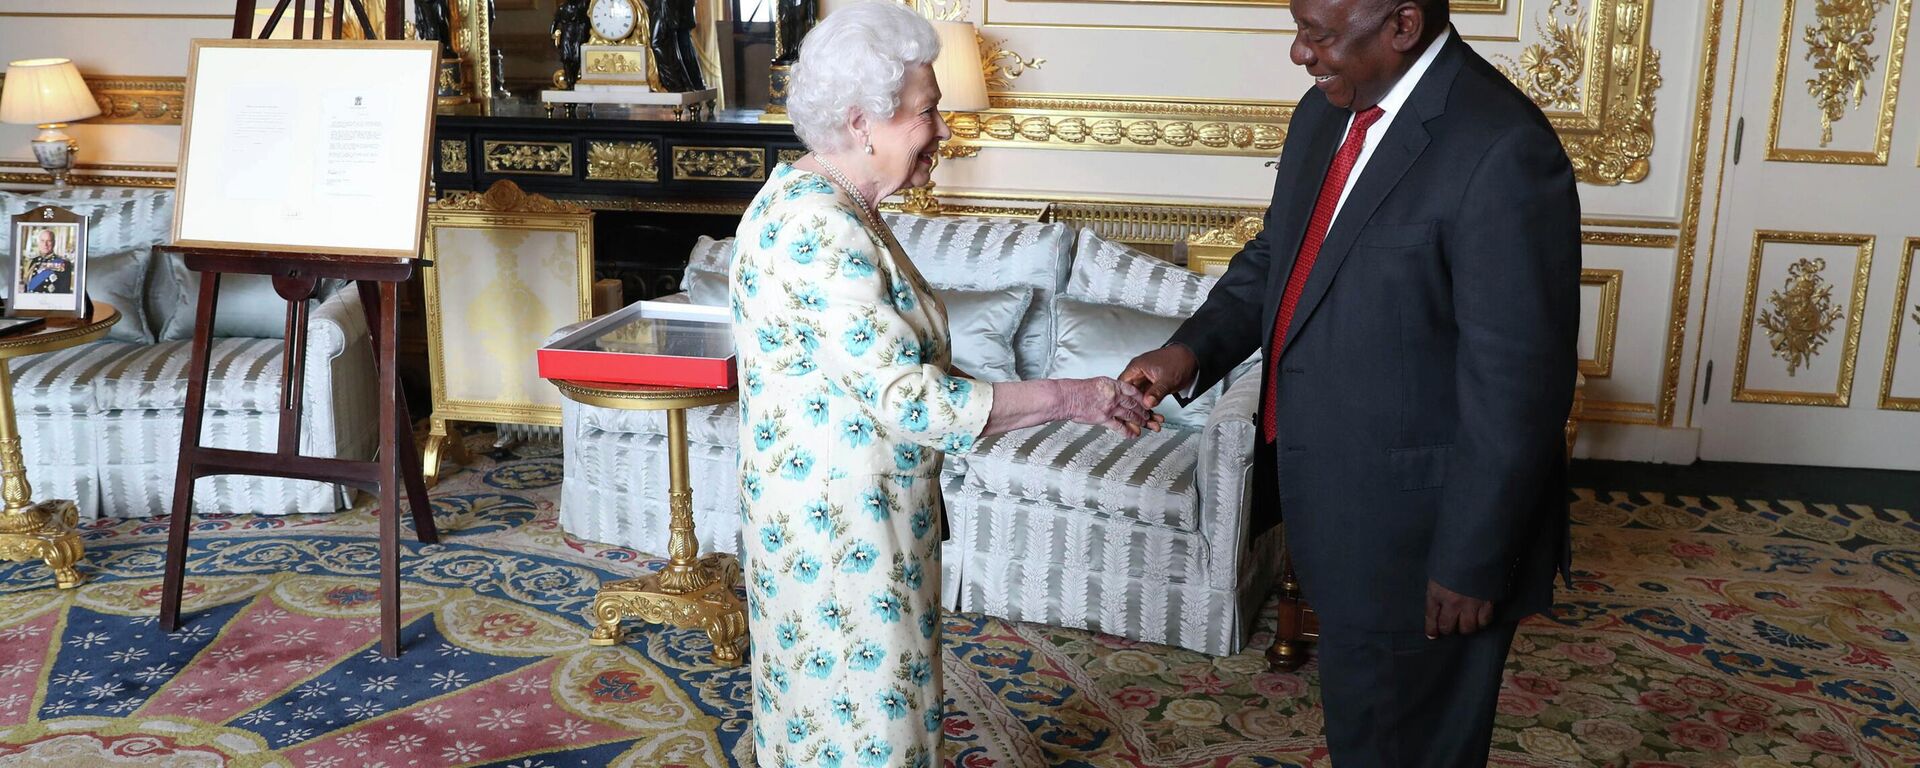 Queen Elizabeth II receives South African President Cyril Ramaphosa during an audience at Windsor Castle, England, Tuesday April 17, 2018. (Steve Parsons/pool via AP) - Sputnik International, 1920, 09.09.2022